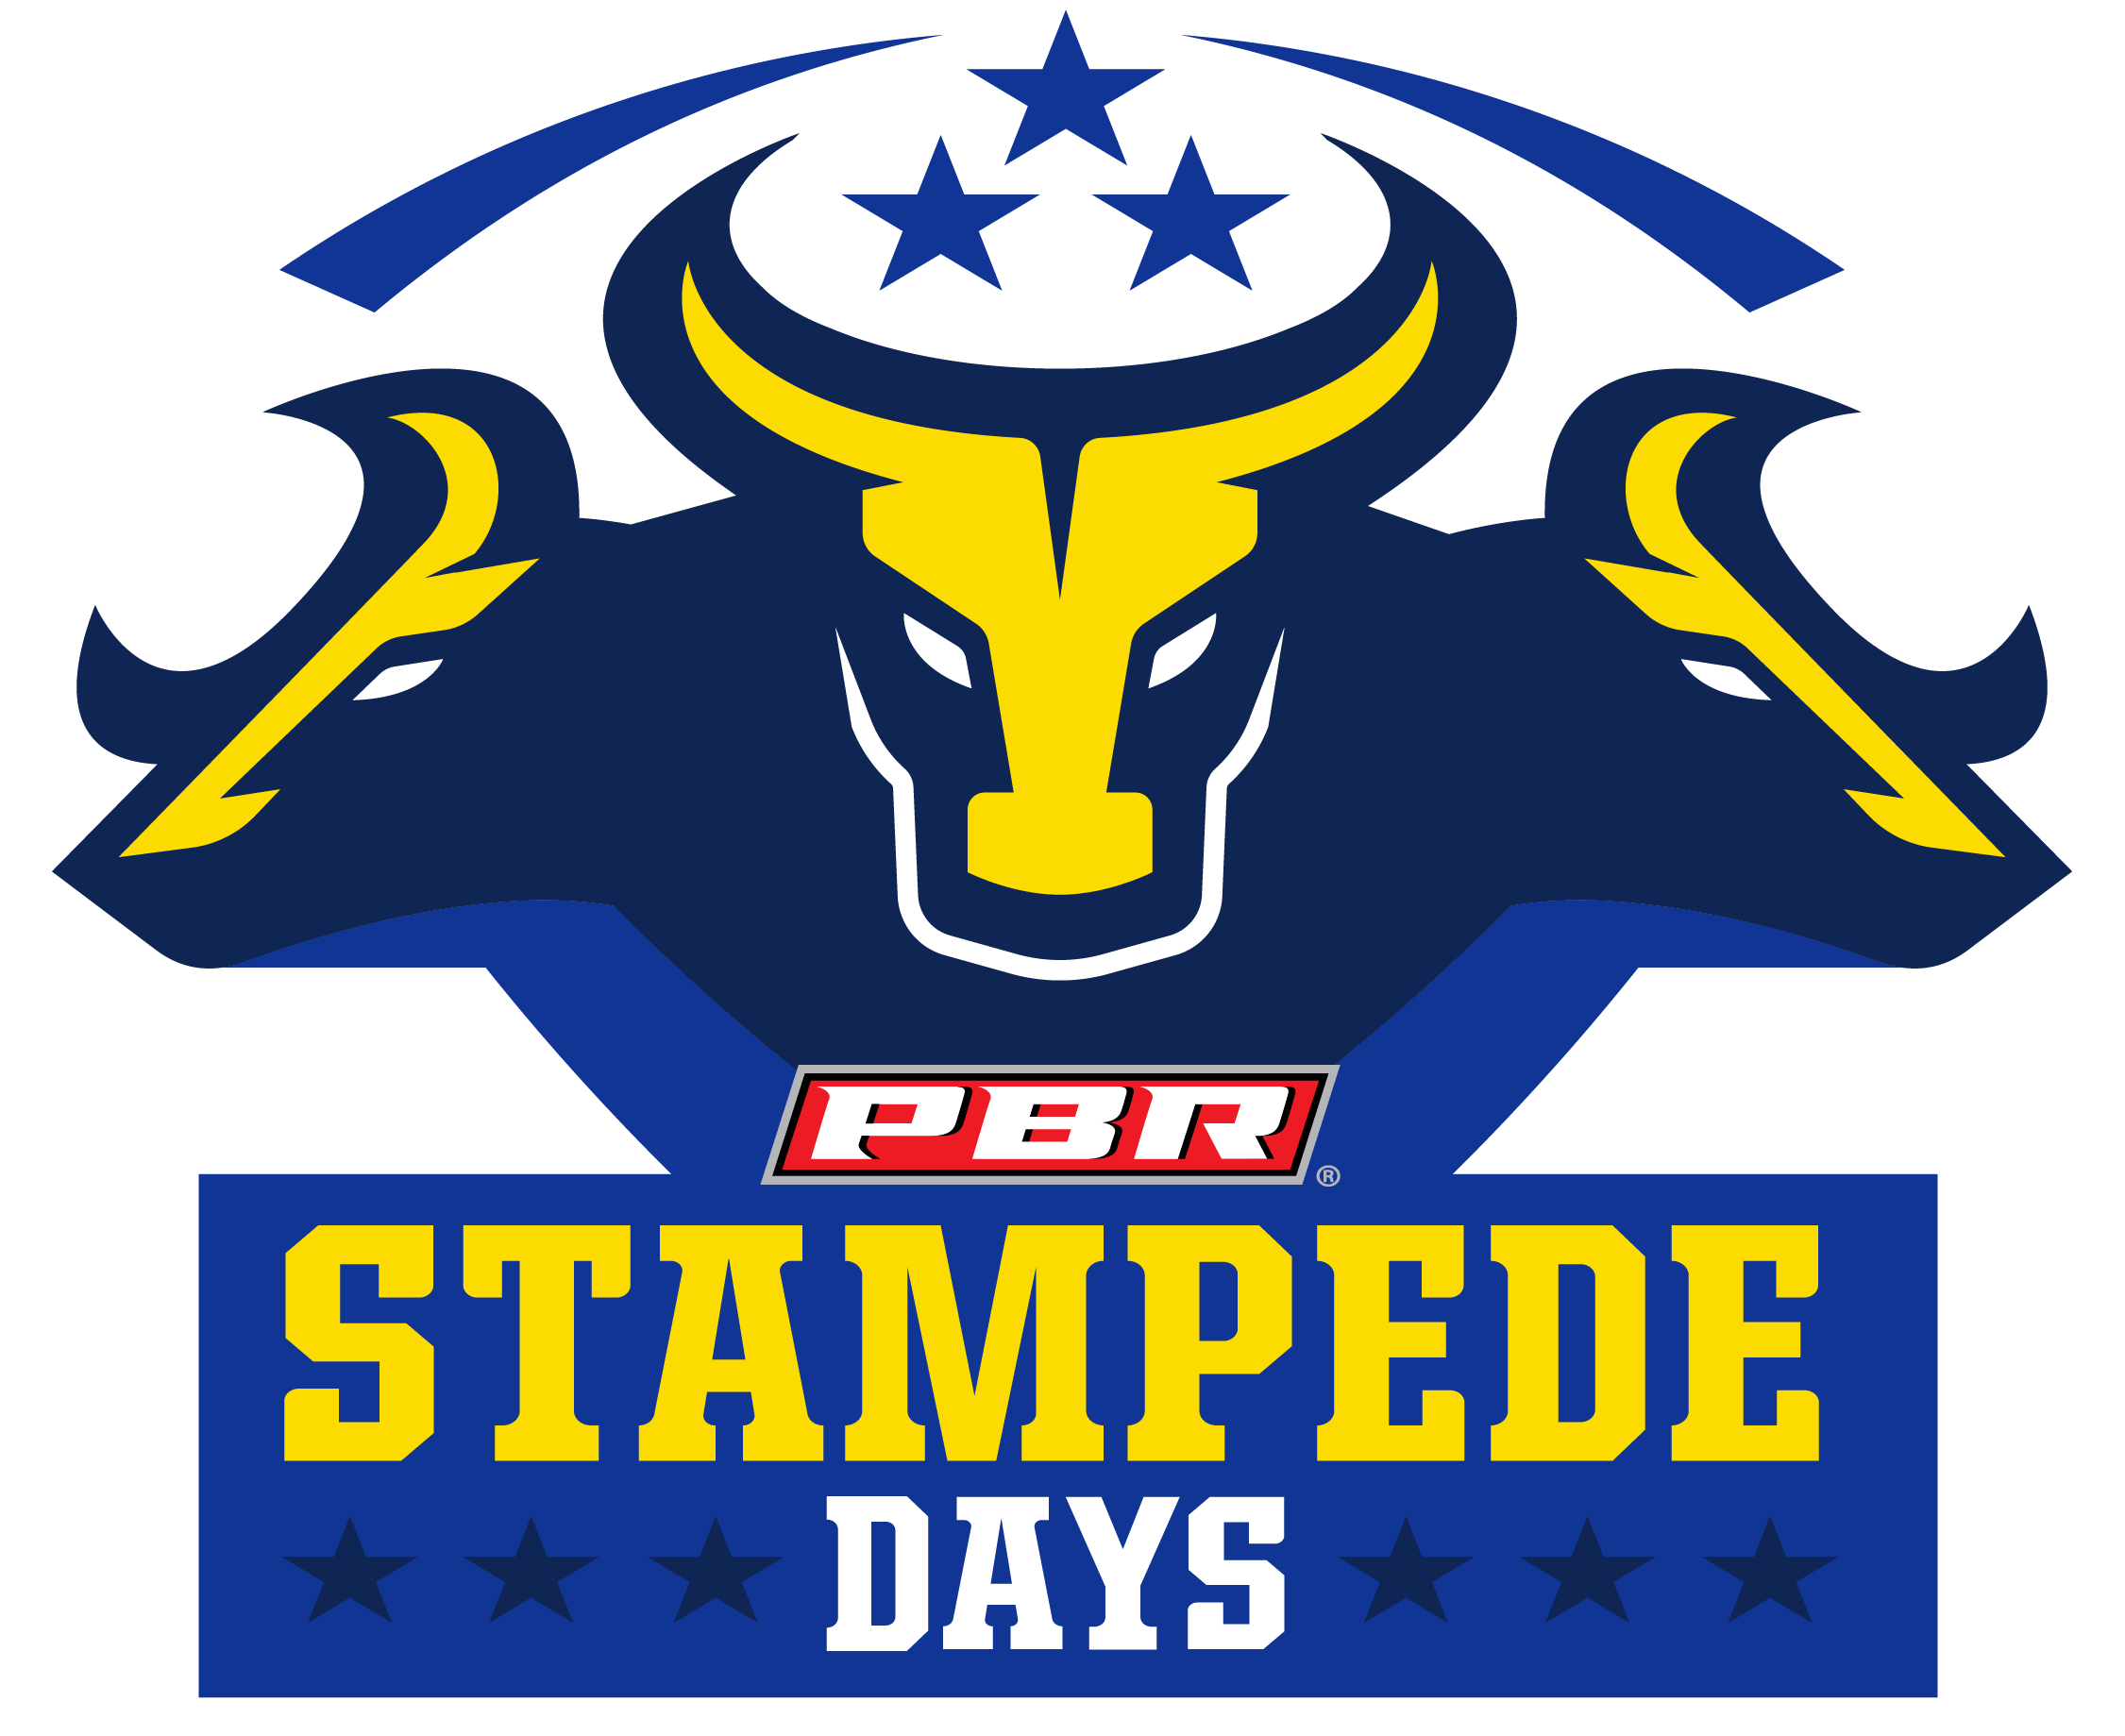 PBR Stampede Days logo